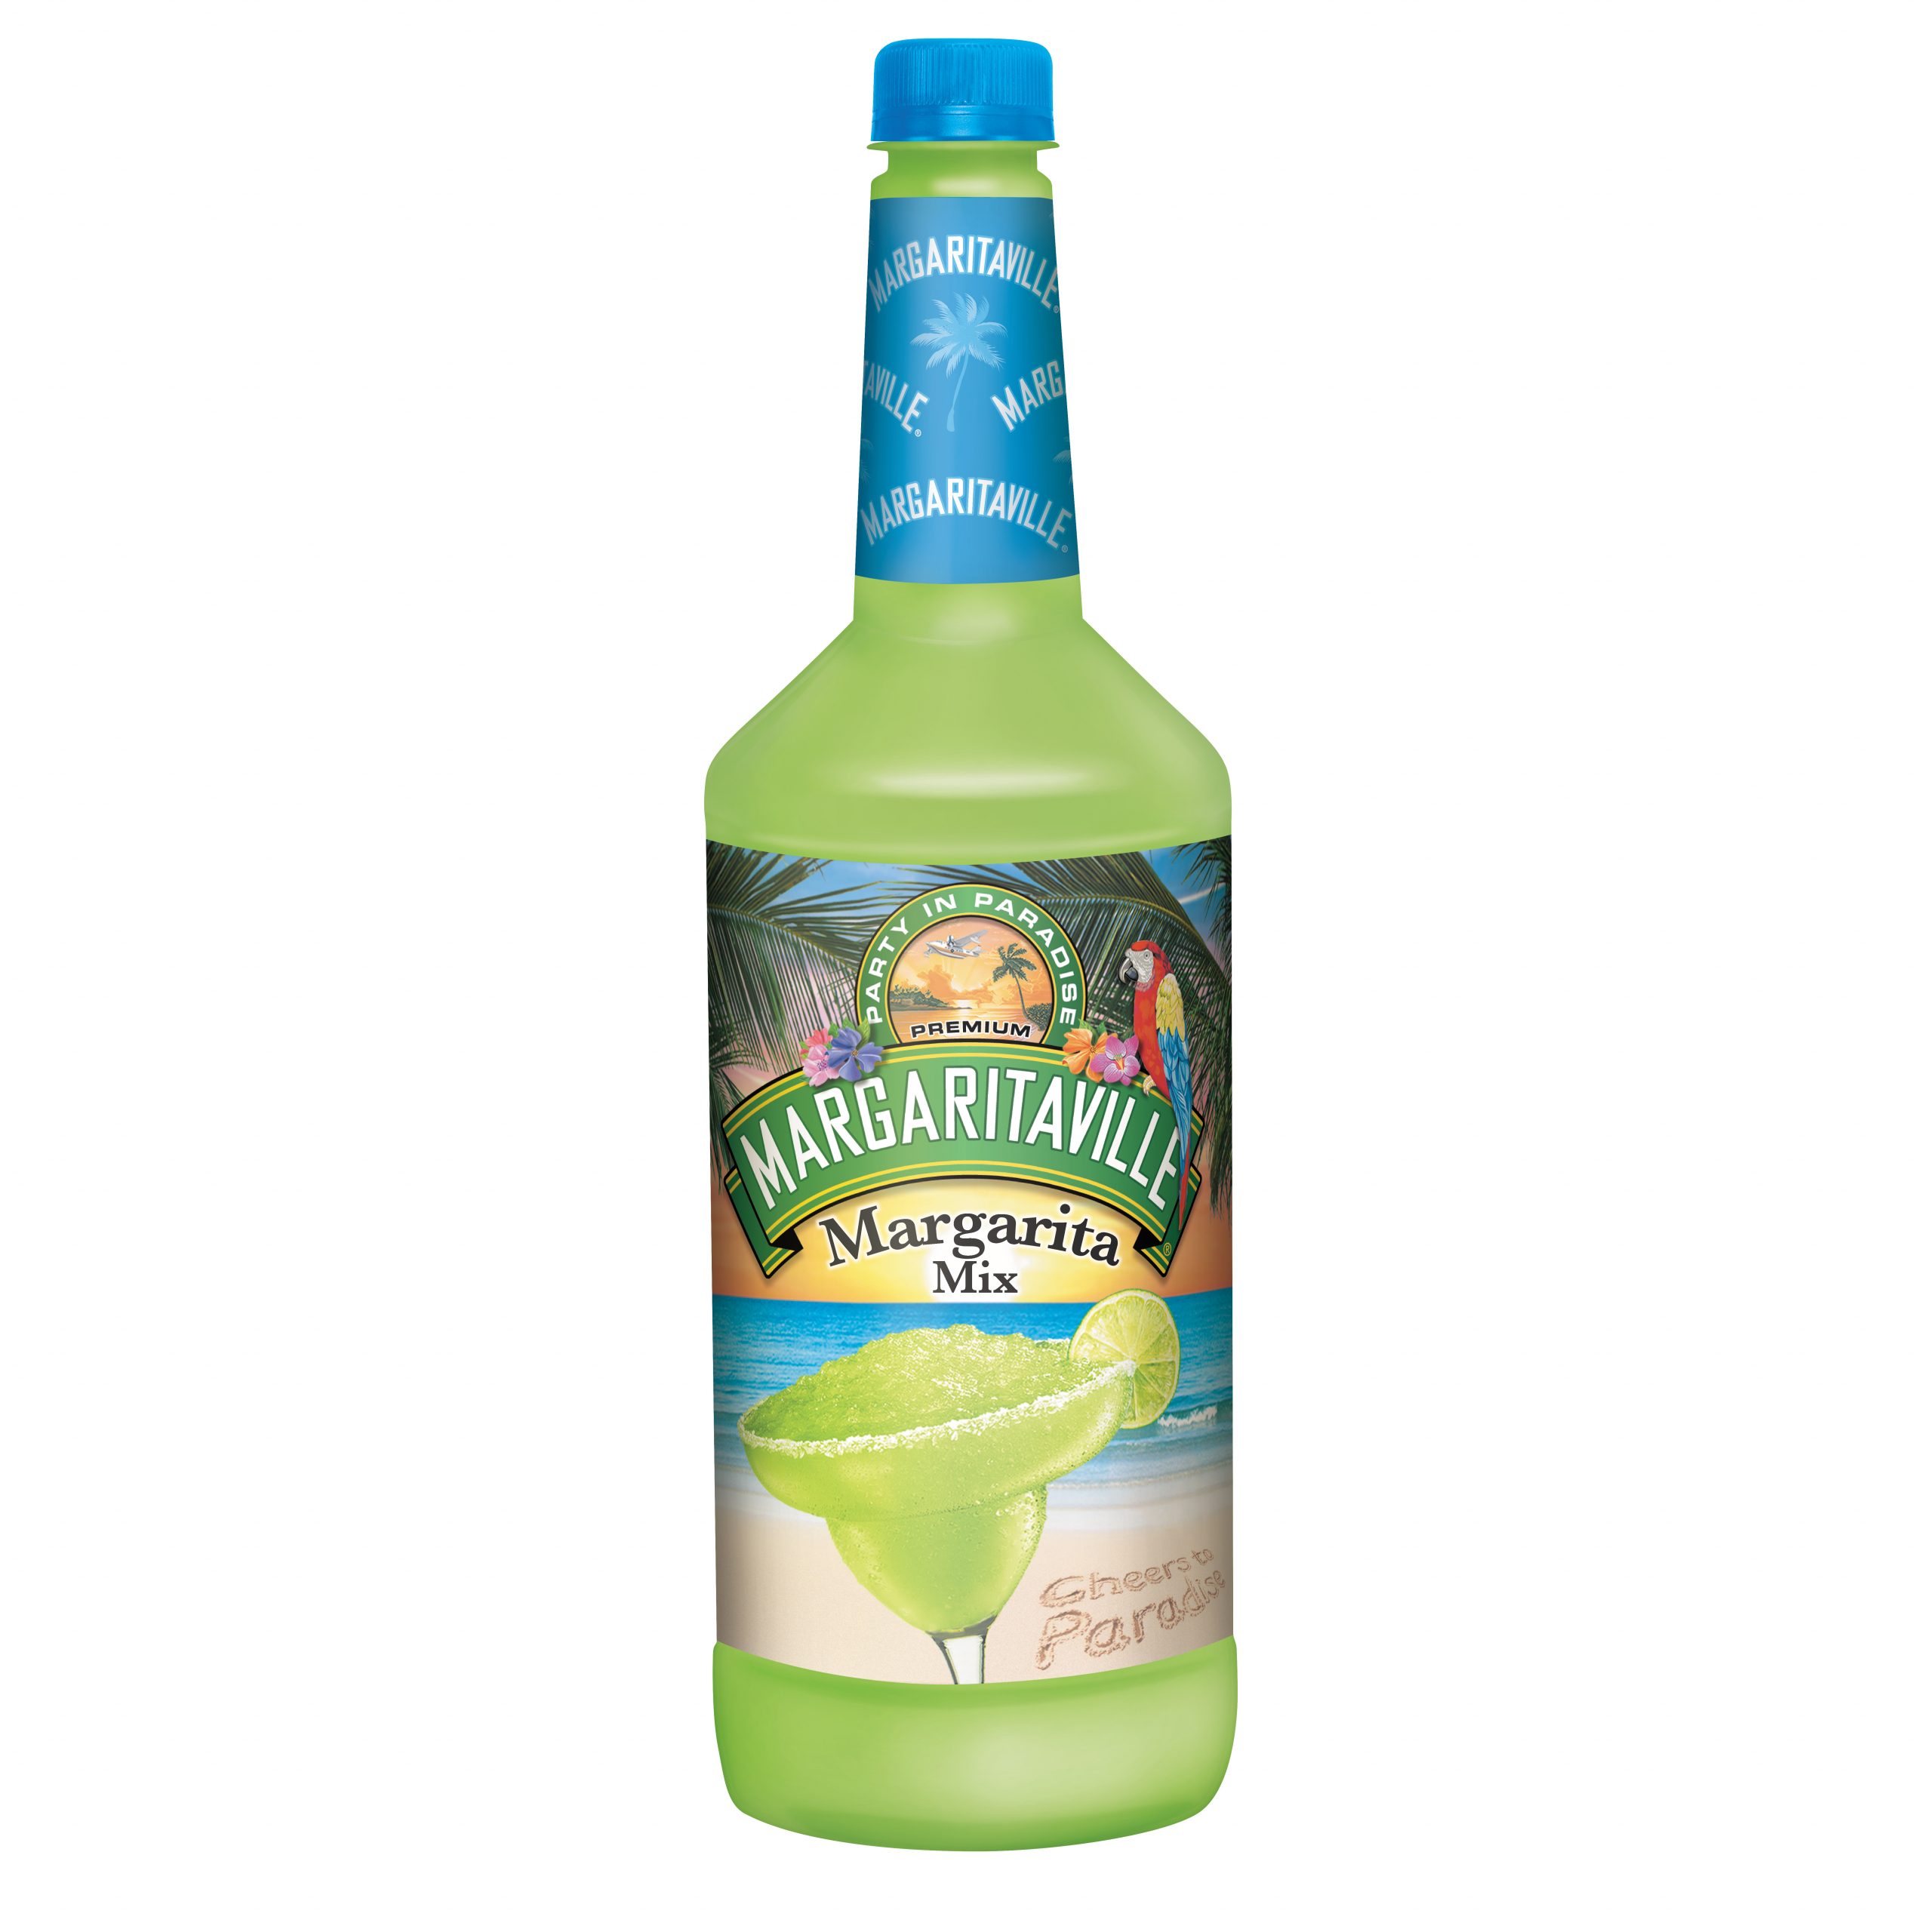 Margaritaville Margarita Mix, 1 L bottle, 1 Count